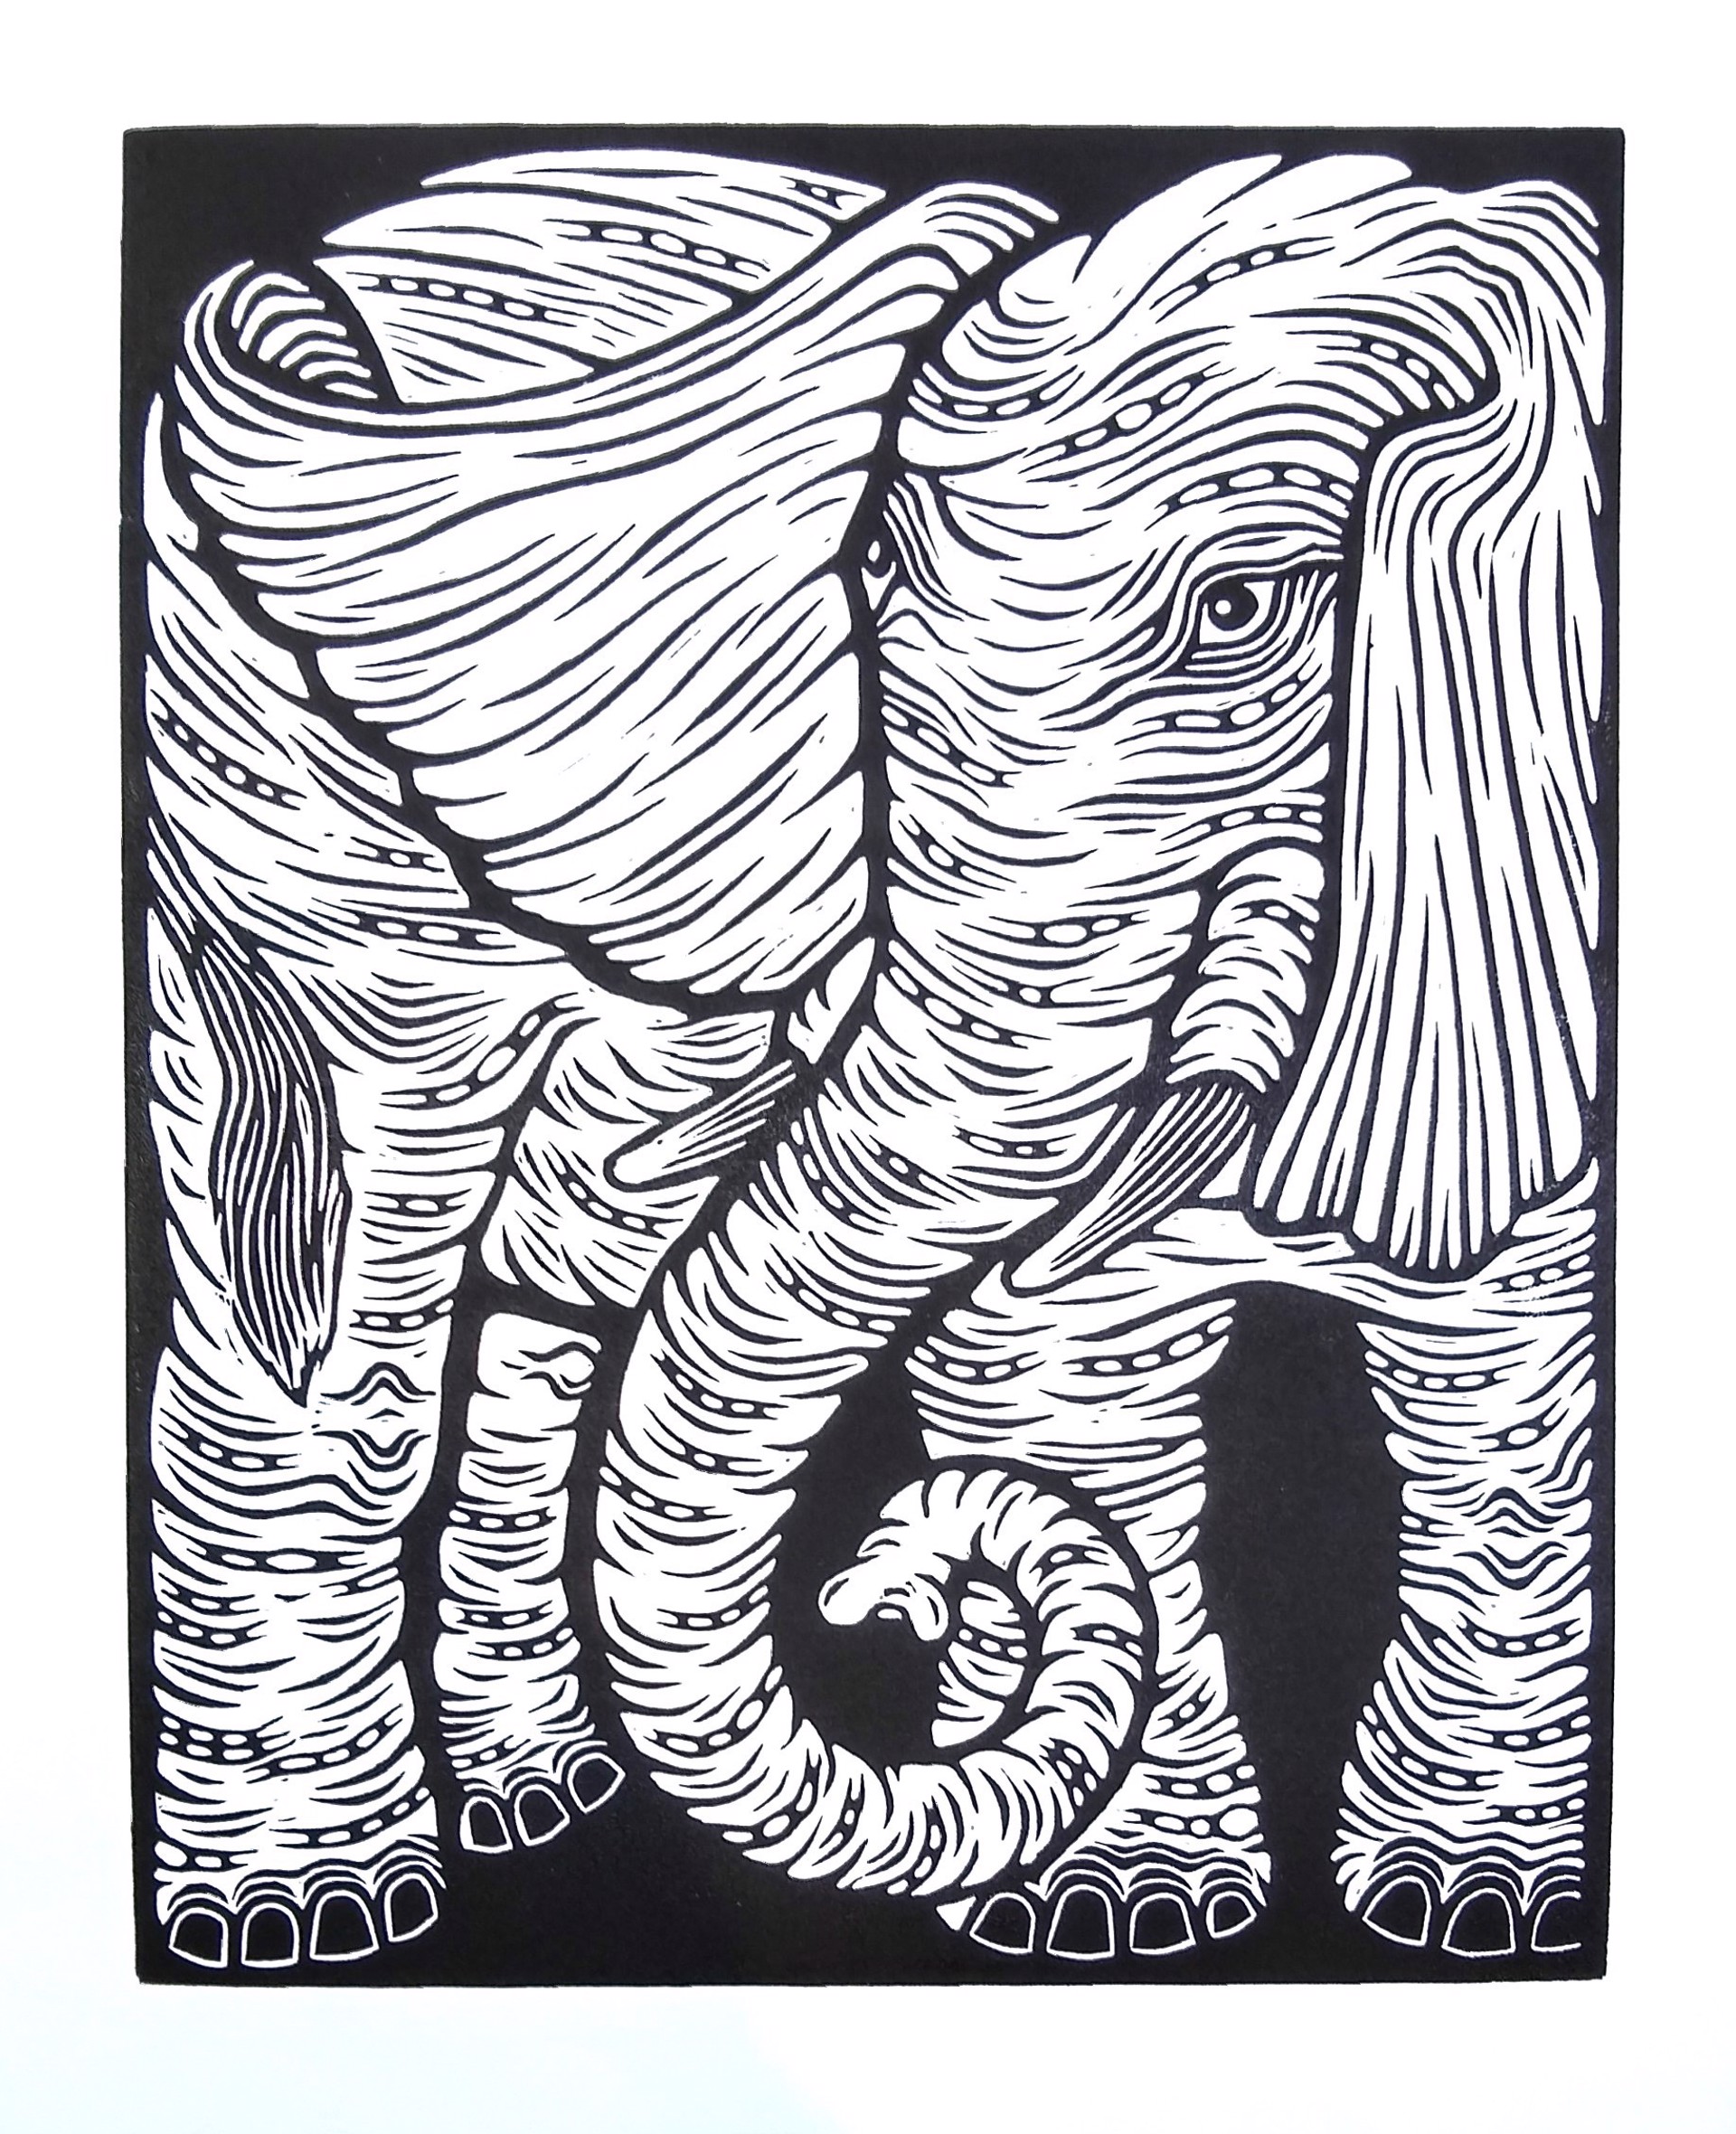 Elephas Maximas by Thomas Rude